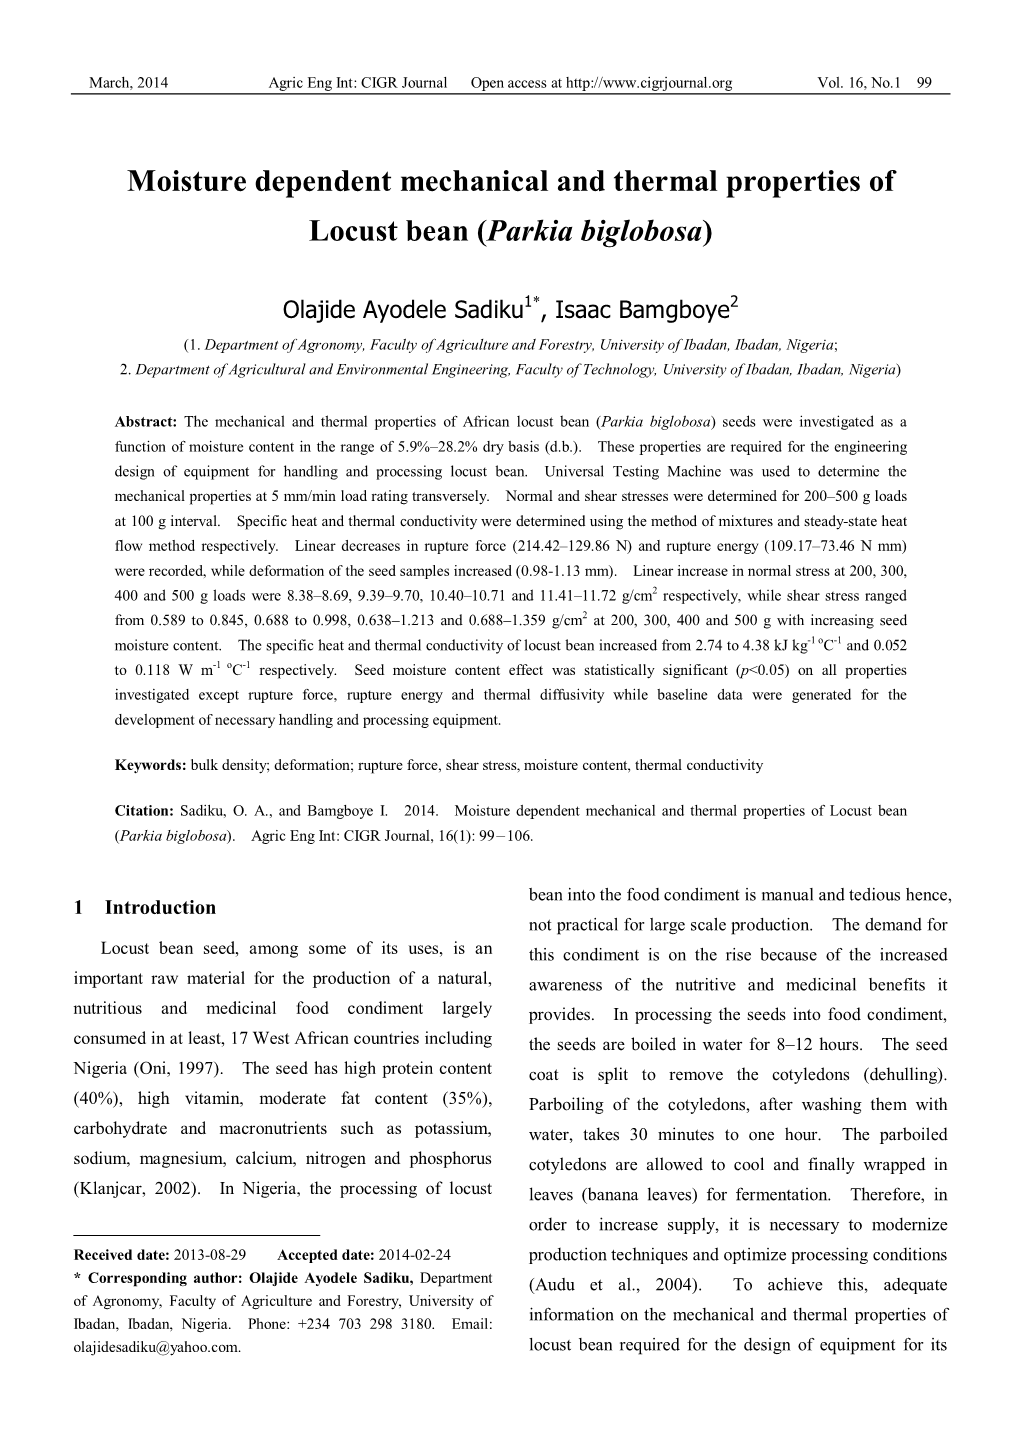 Moisture Dependent Mechanical and Thermal Properties of Locust Bean (Parkia Biglobosa)